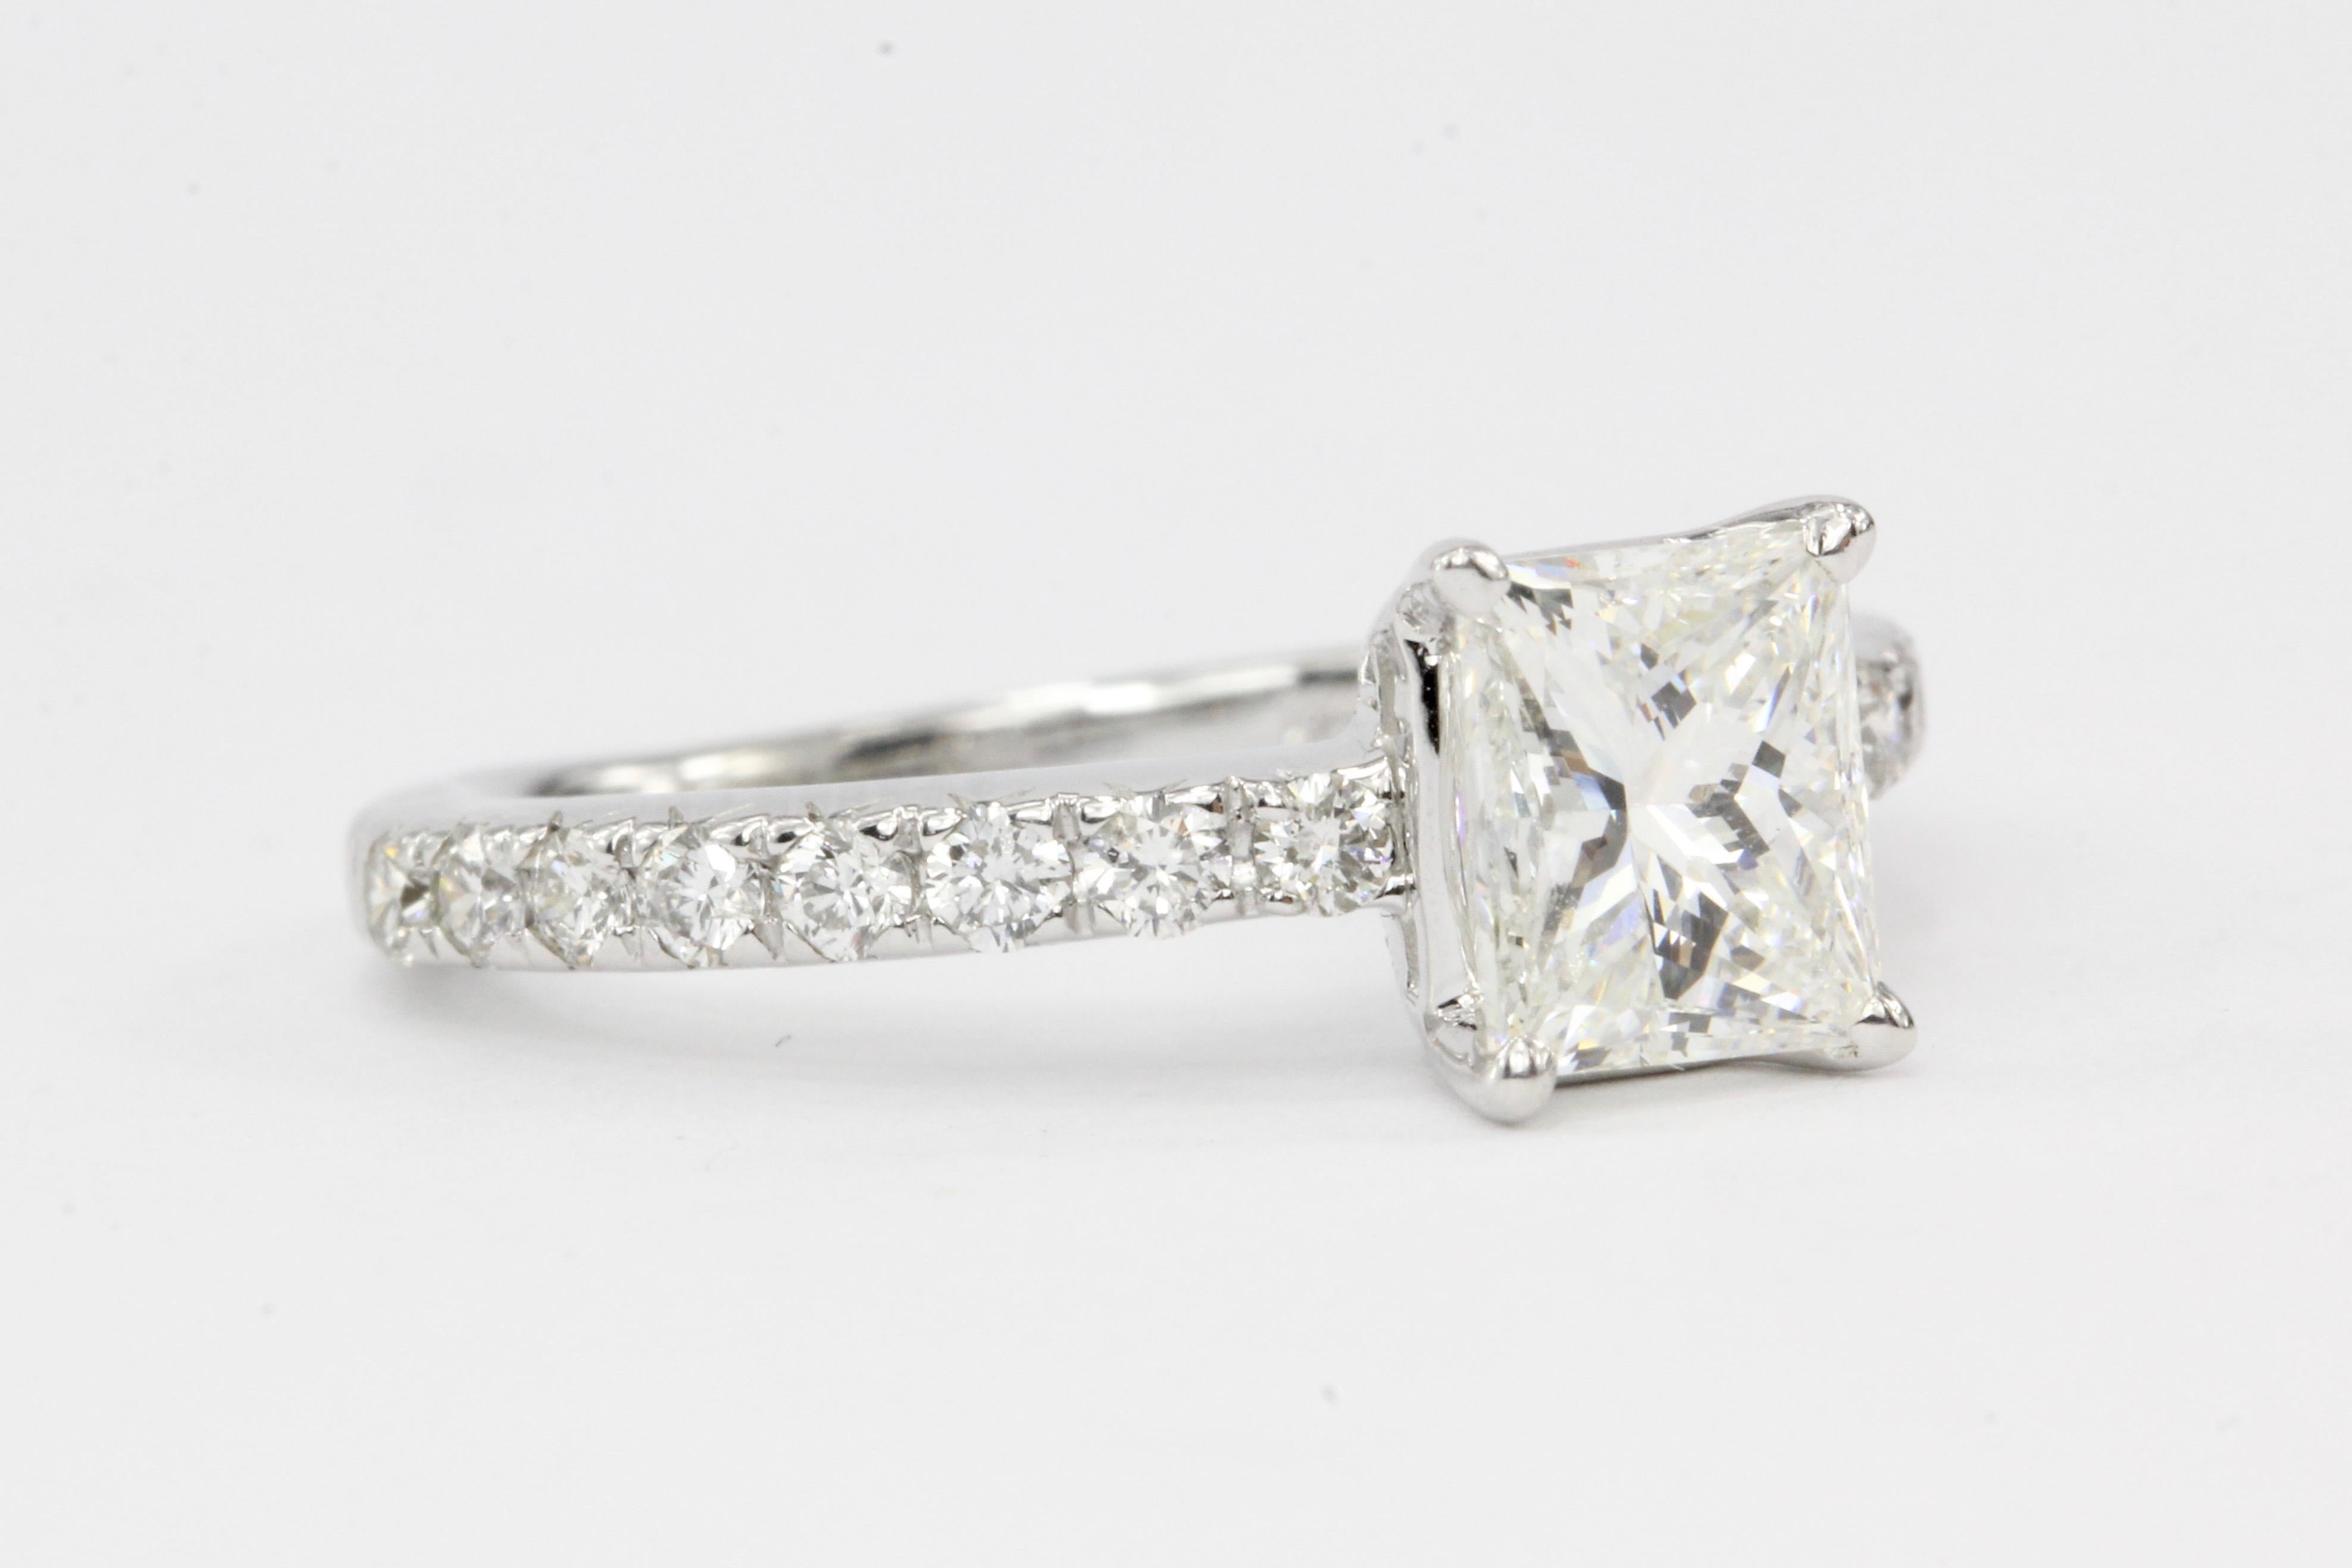 1.2 carat princess cut diamond ring